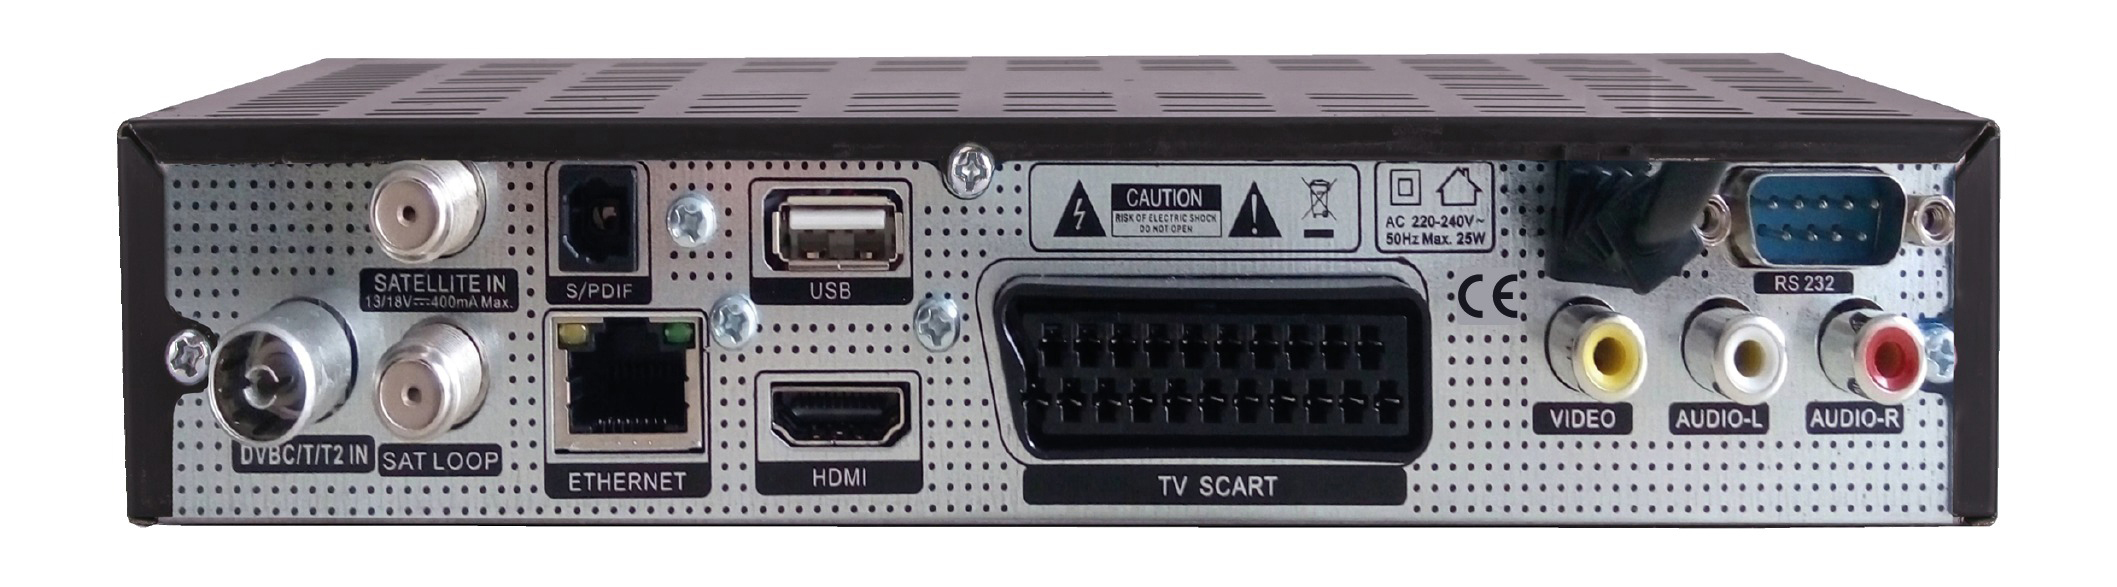 OPTICUM RED Sloth Combo DVB-C, Plus Schwarz) PVR PVR-Funktion, Receiver HD, (HDTV, DVB-S2, DVB-C2, Tuner, Twin DVB-T2 DVB-S, Combo